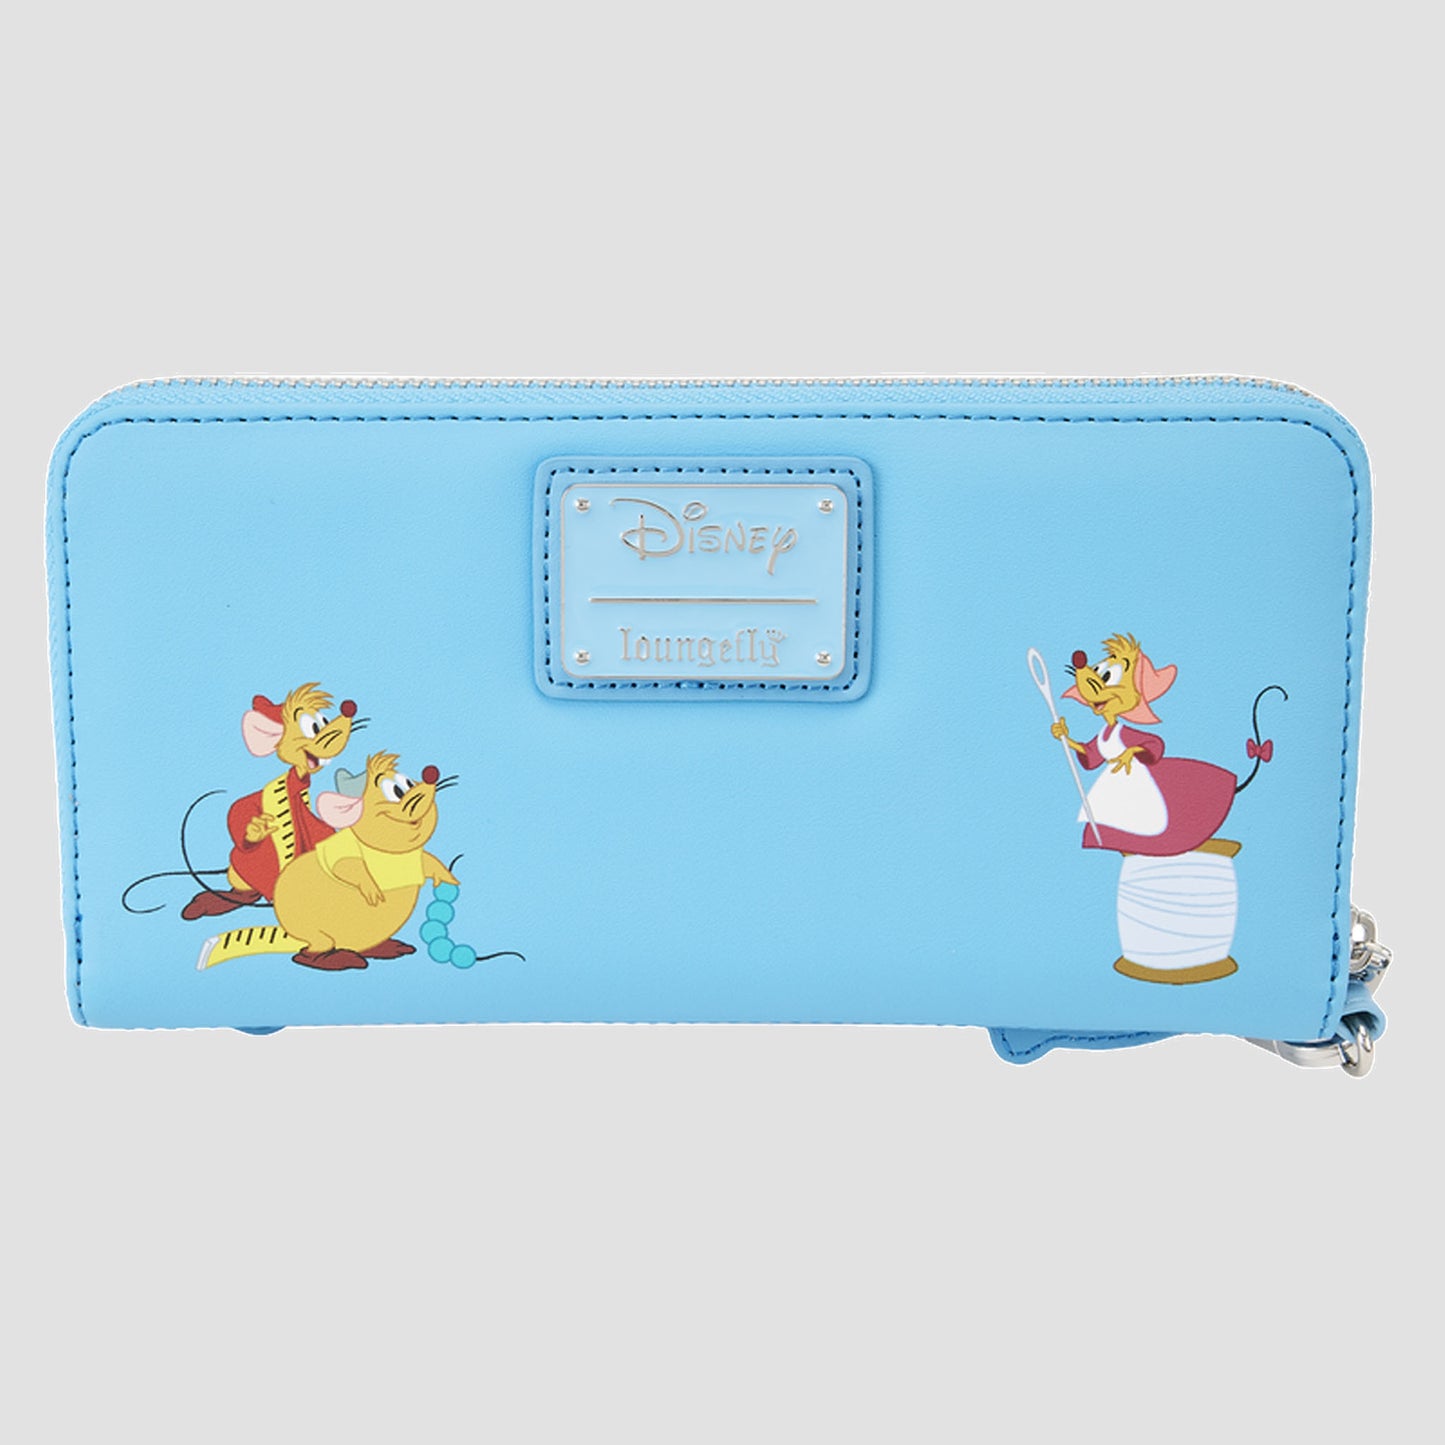 Cinderella (Disney) Lenticular Princess Series Zip-Around Wristlet Wallet by Loungefly